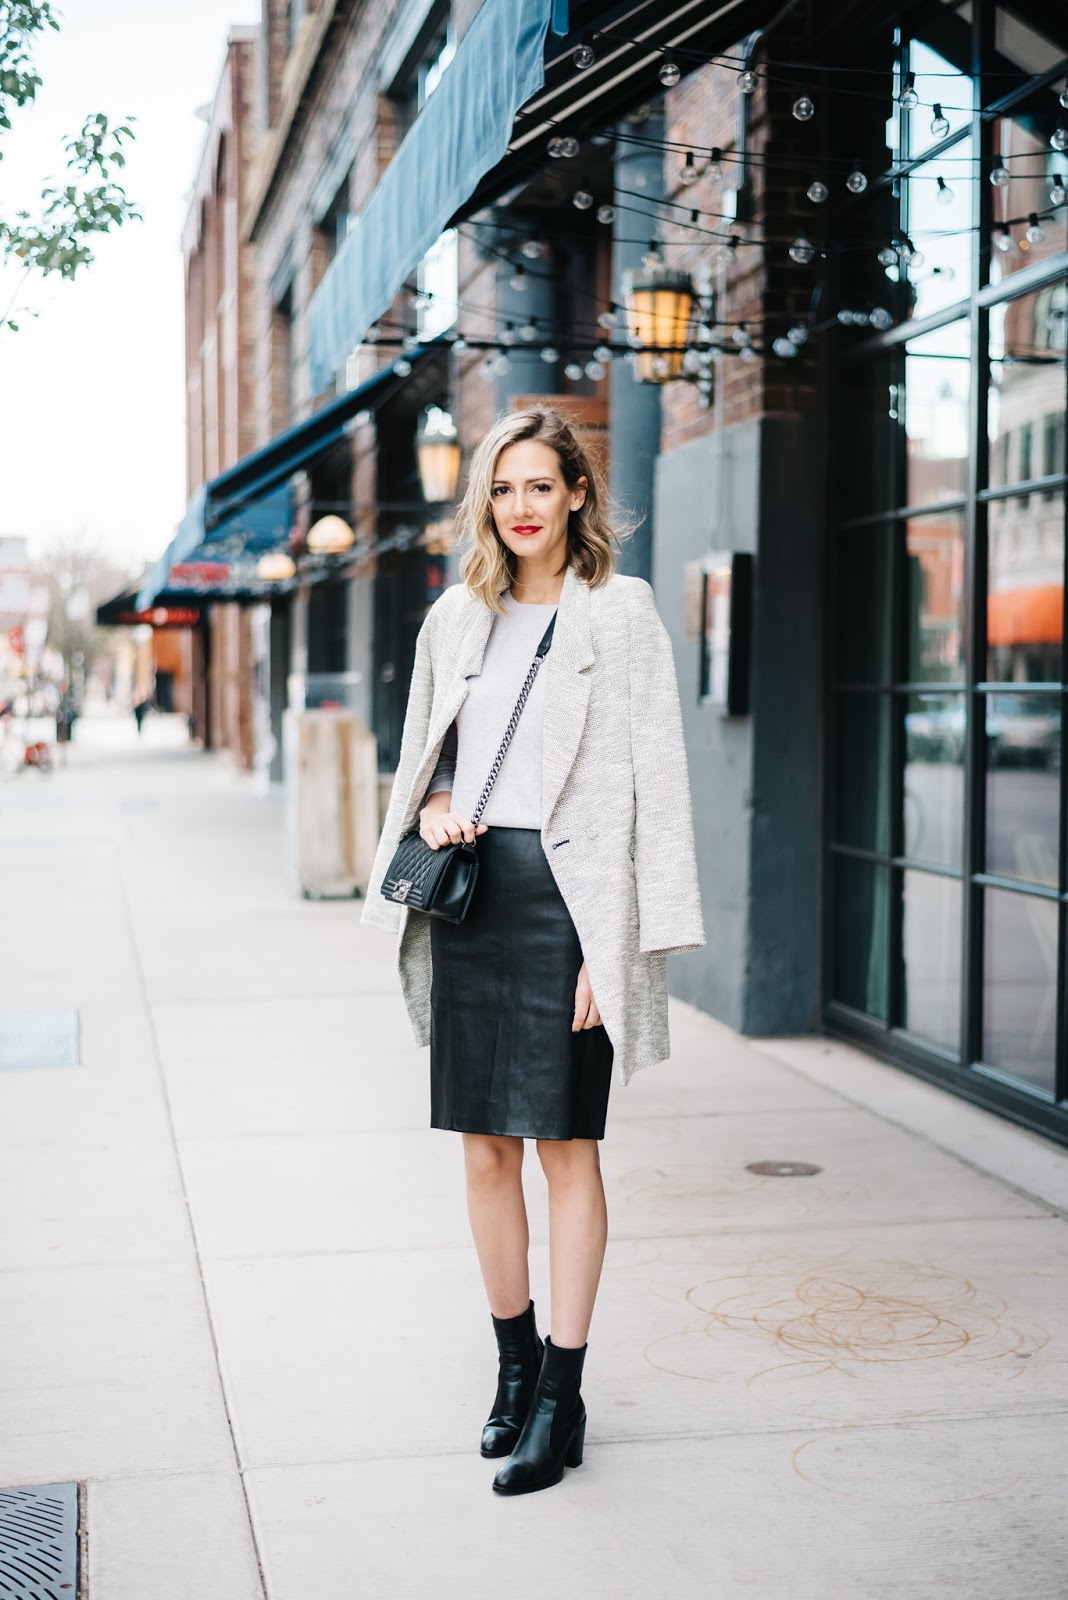 Leather Pencil Skirt (See Jane Wear) | See (Anna) Jane. | Bloglovin’